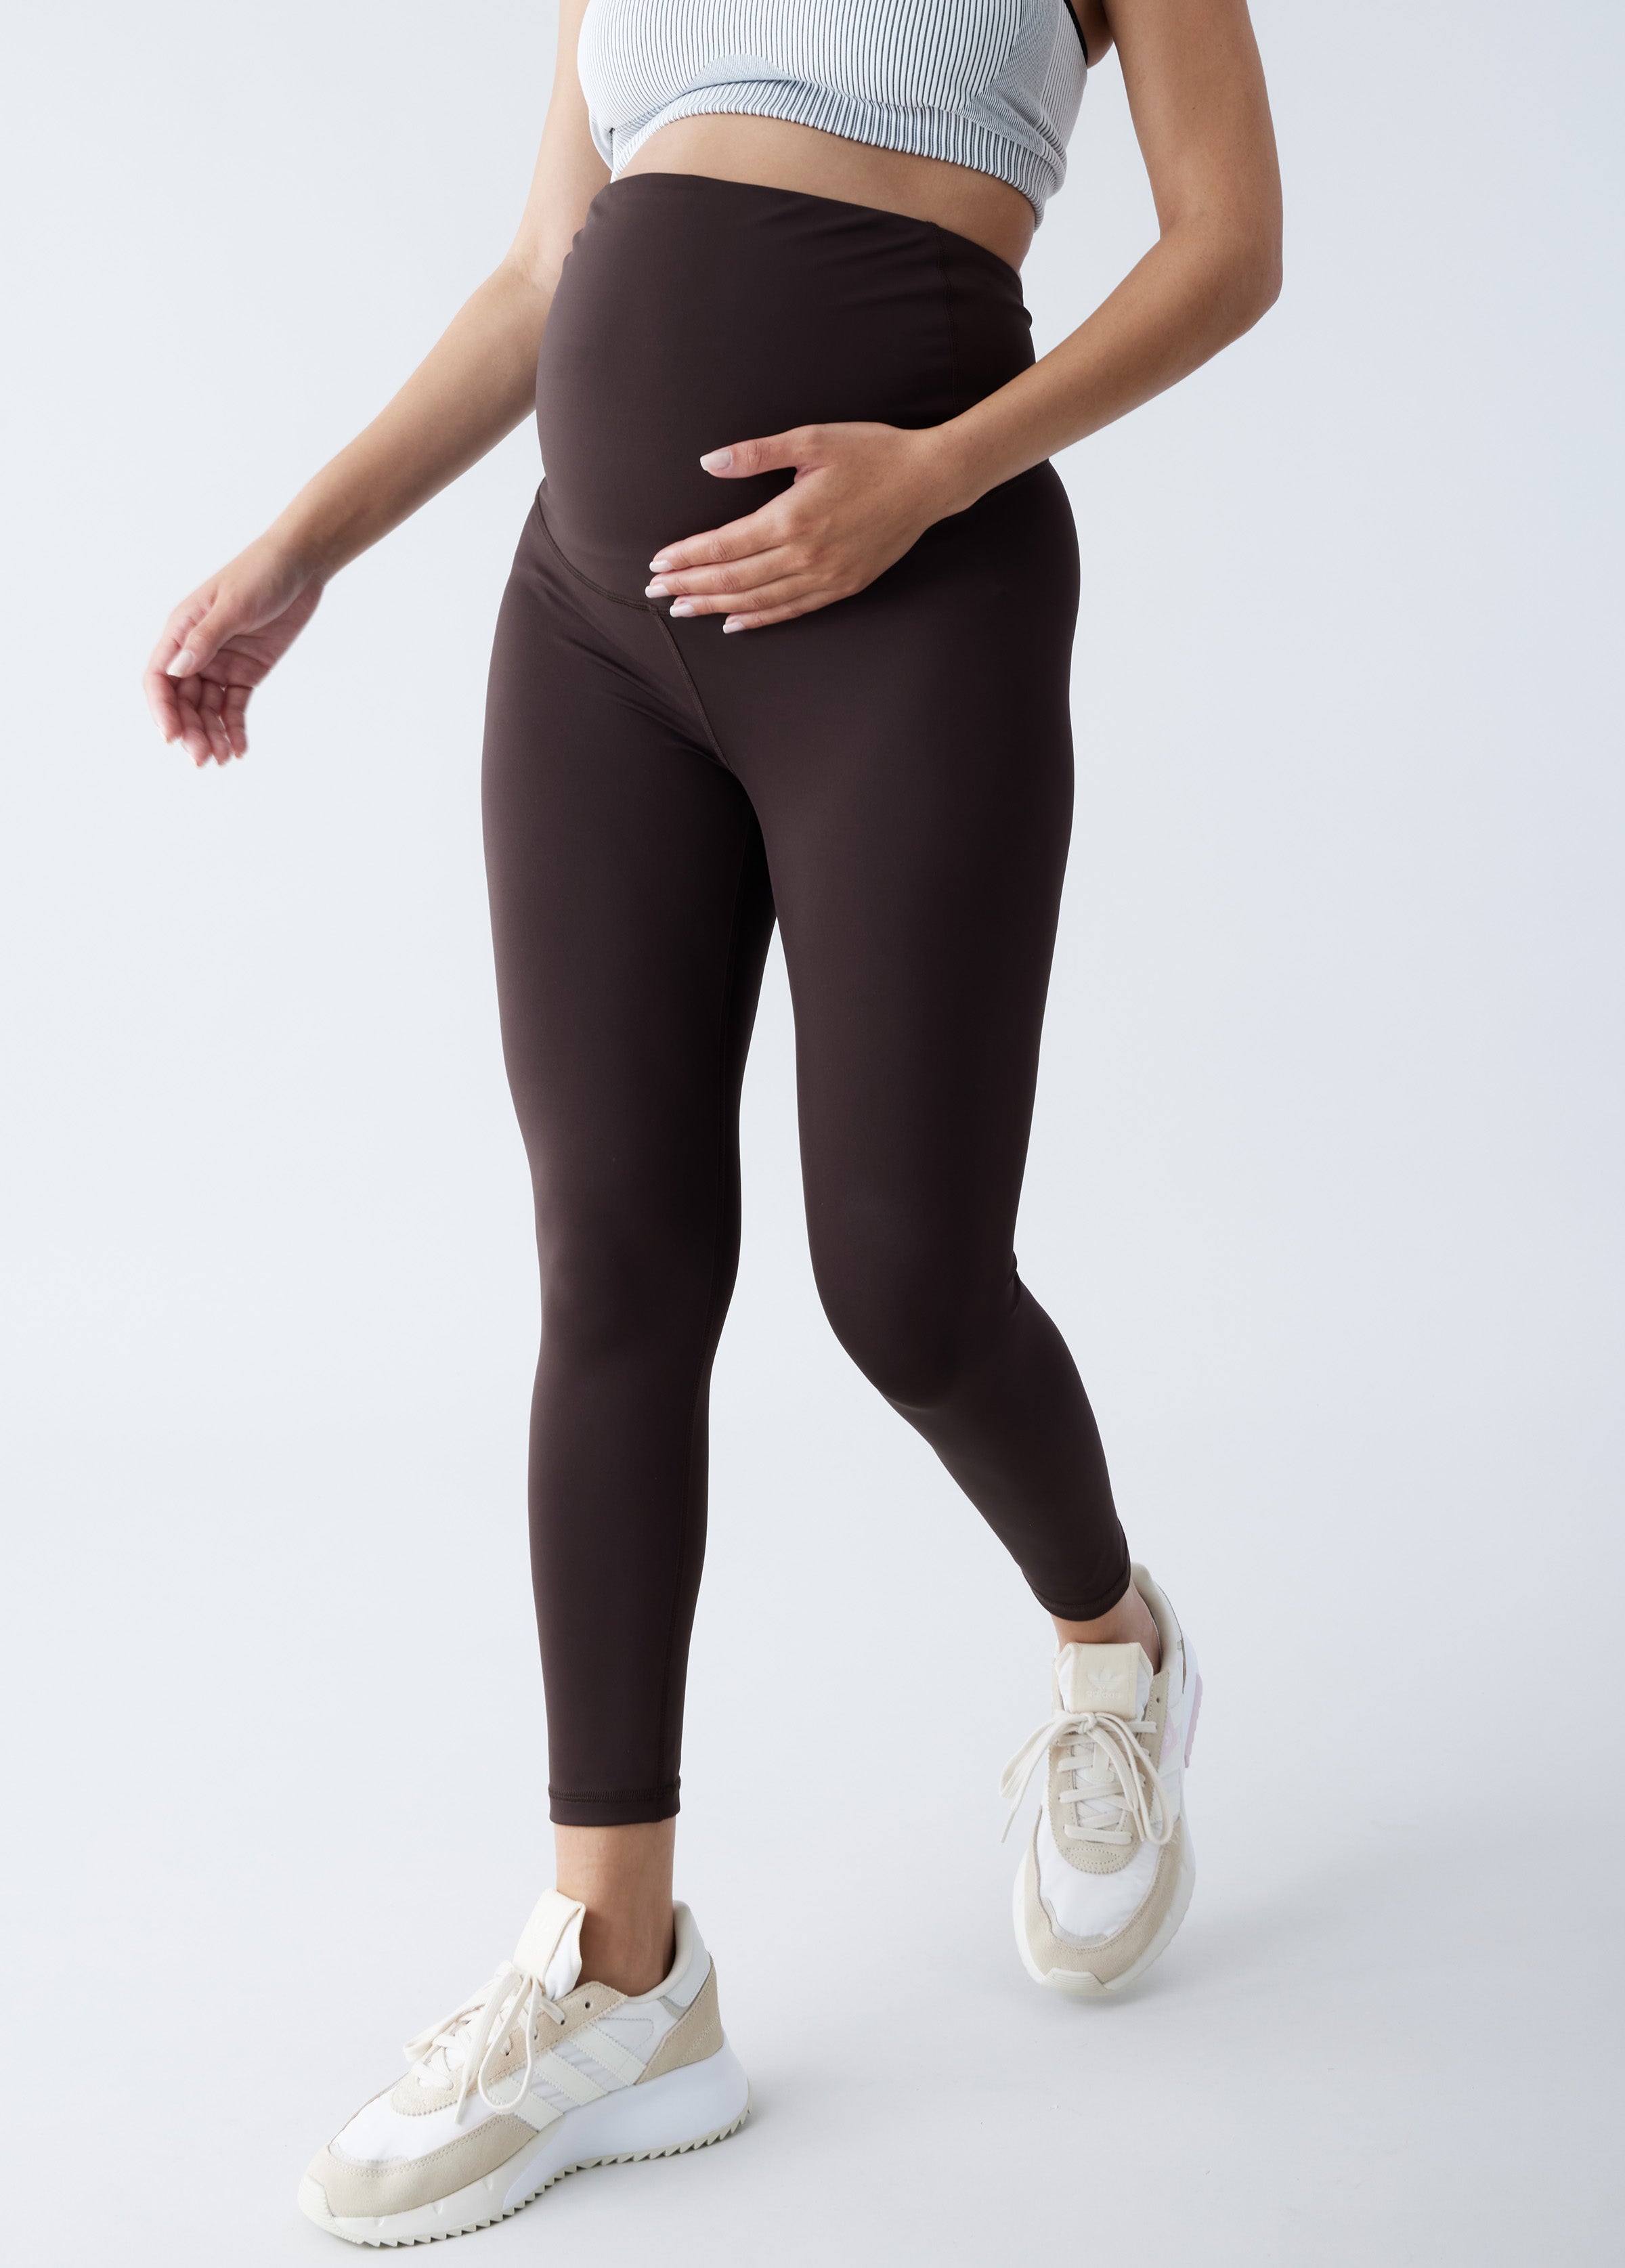 Maternity Exercise Leggings - 7/8 Length, Supportive Waistband